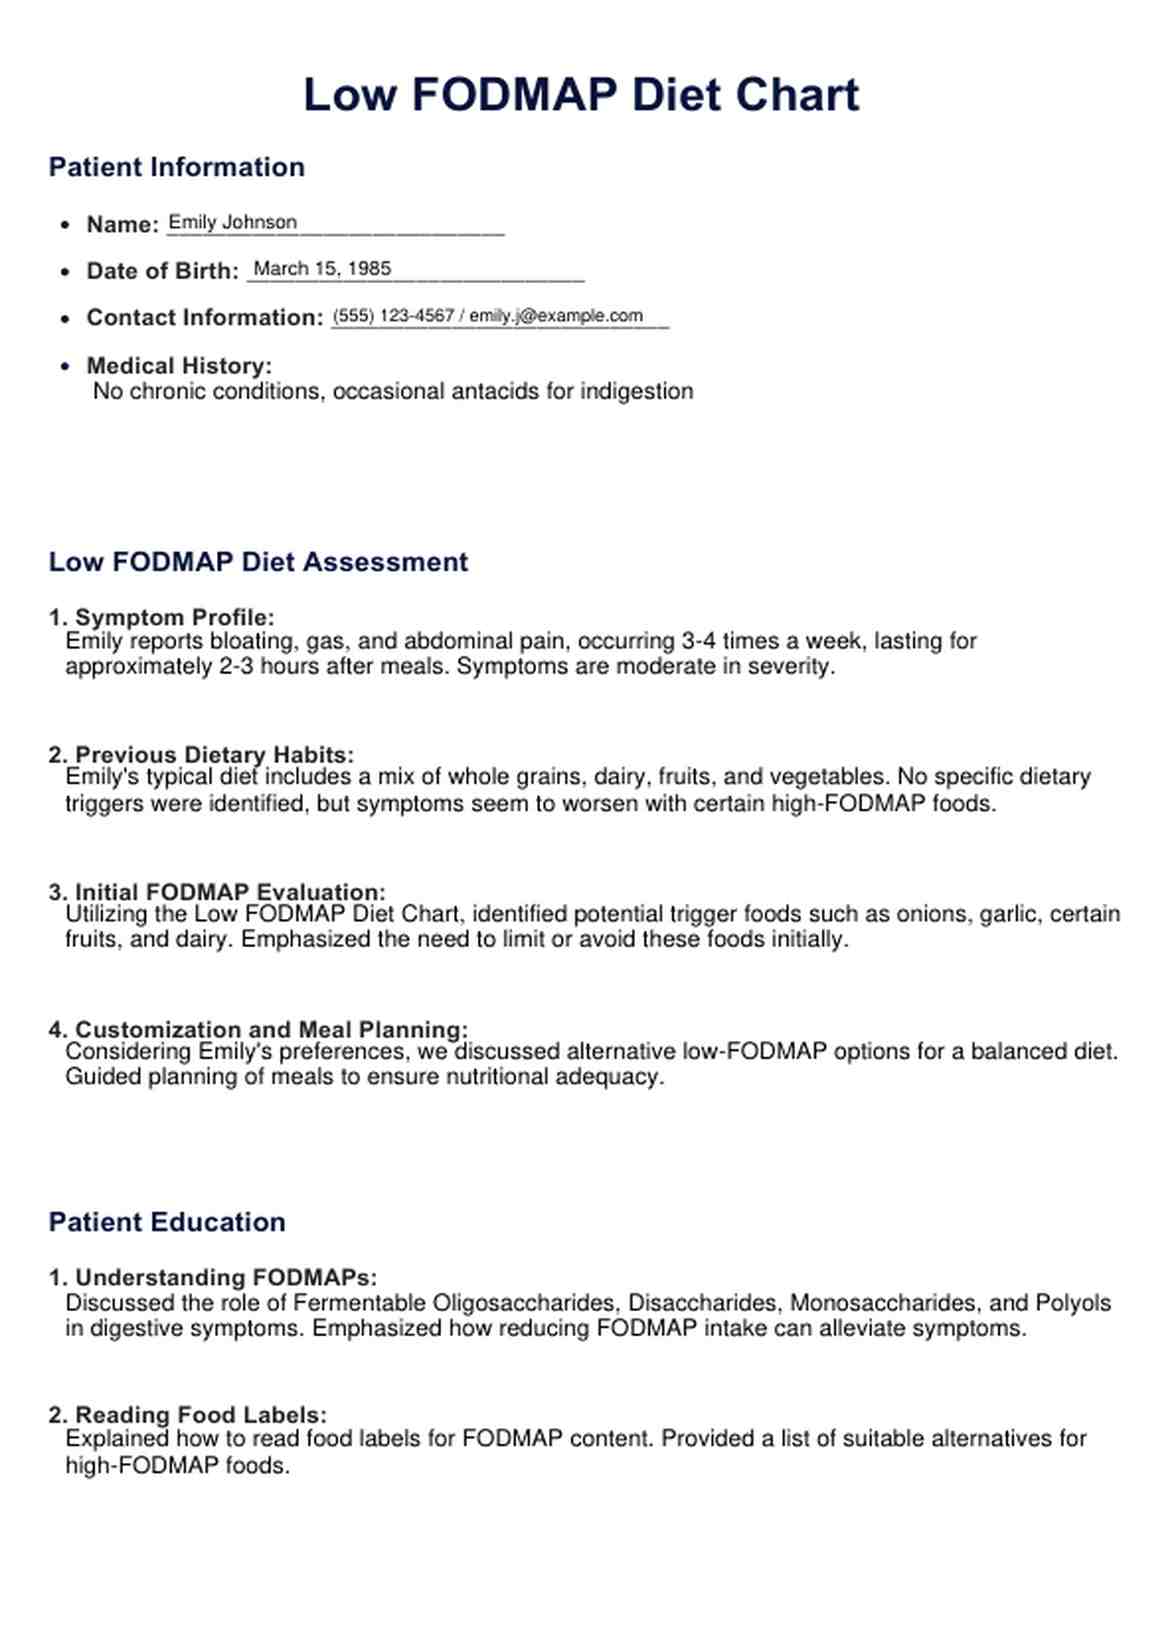 Low FODMAP Diet Chart PDF Example